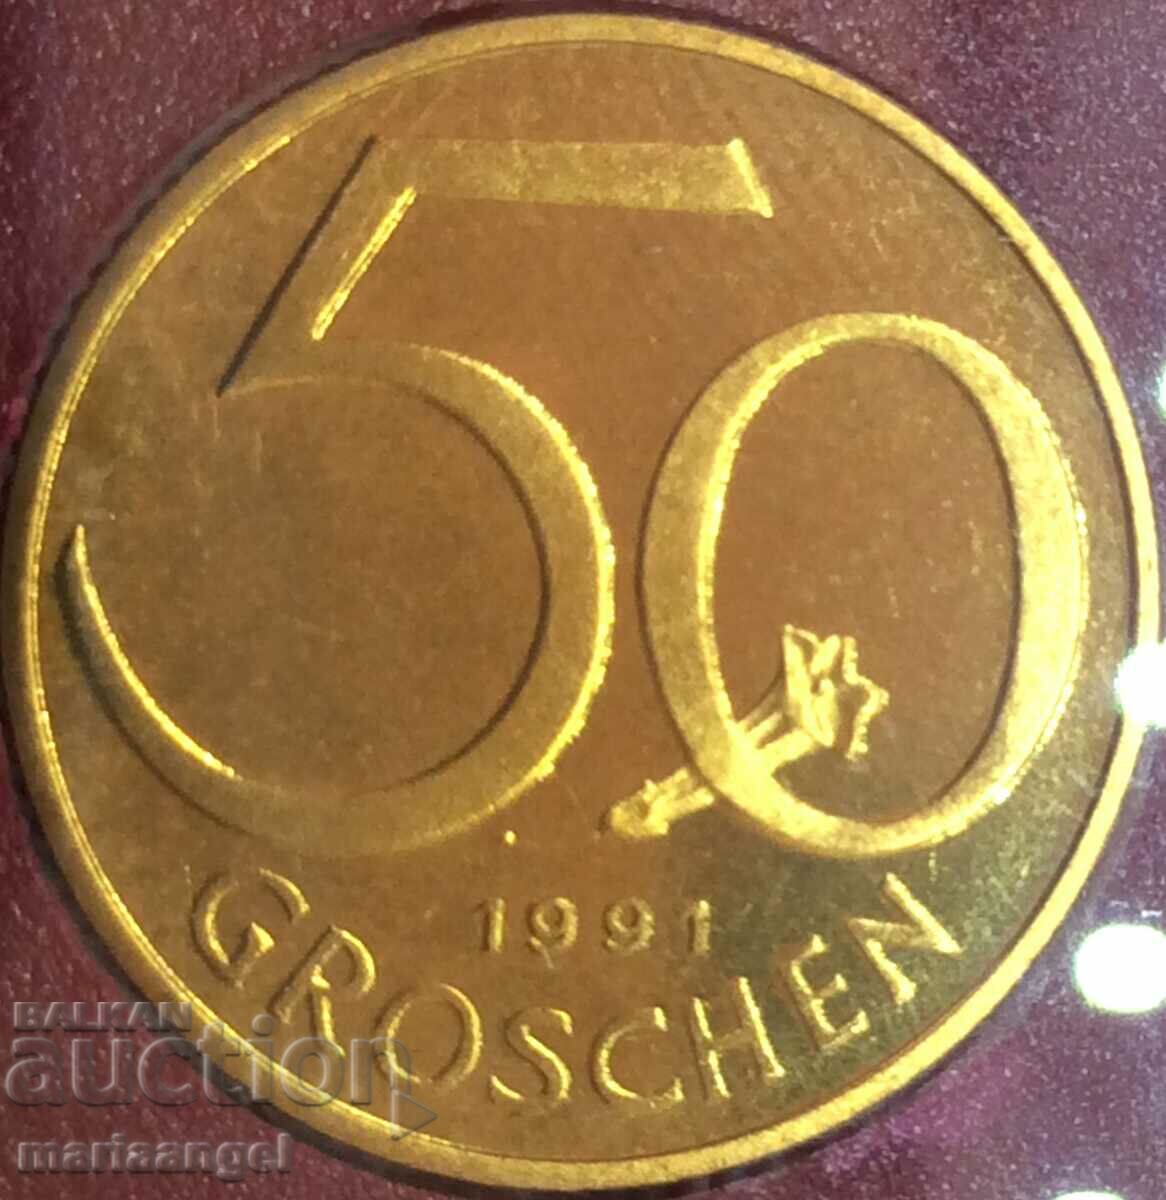 50 гроша 1991 Австрия UNC PROOF